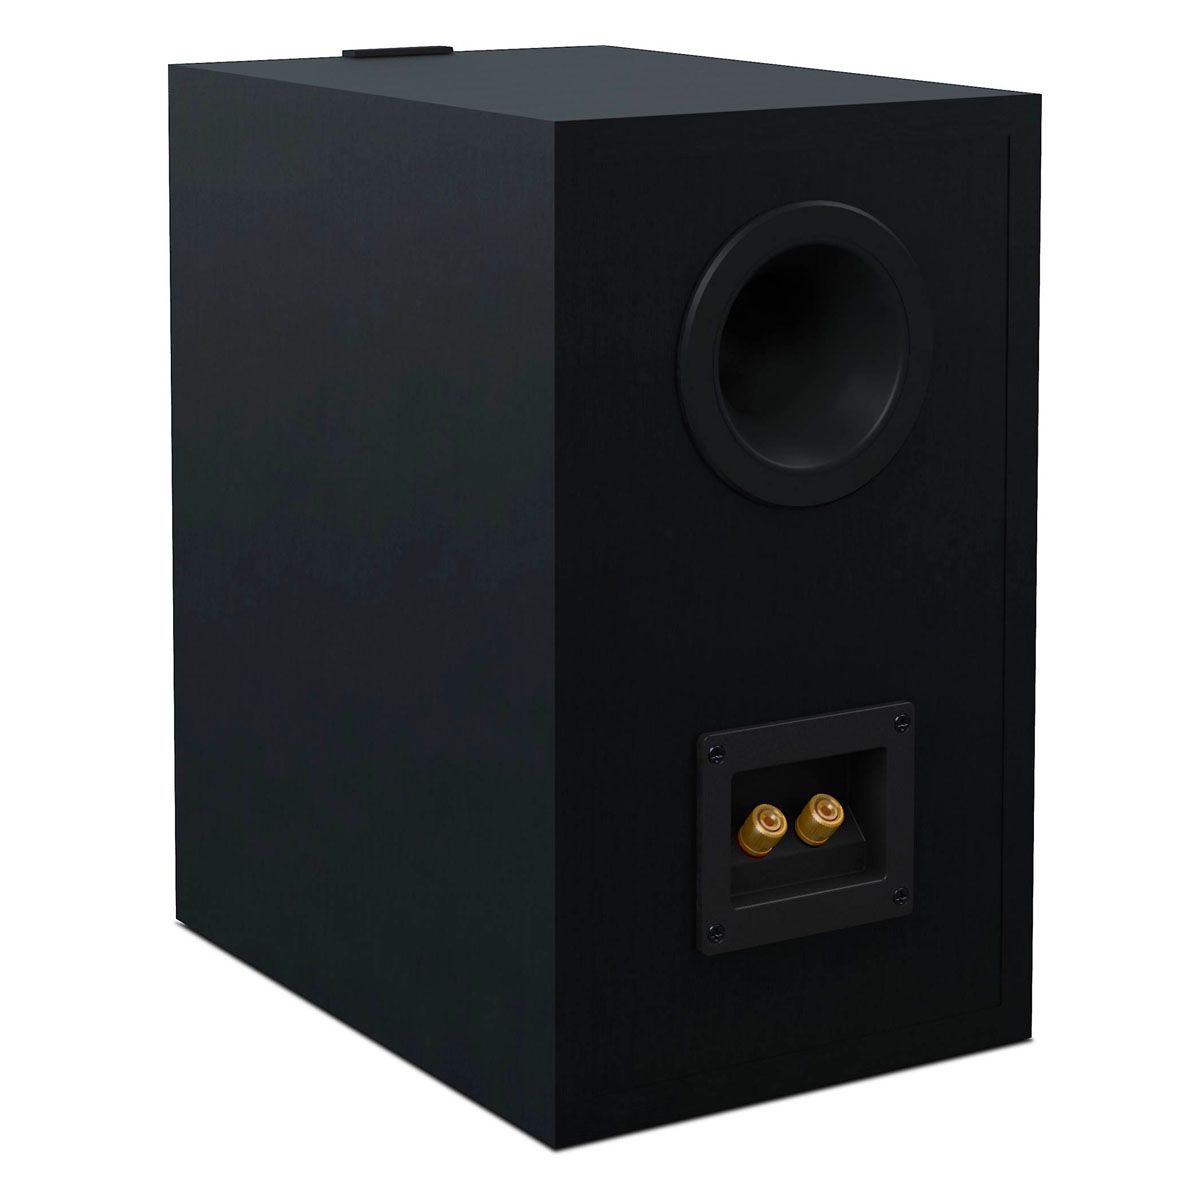 KEF Q350 Bookshelf Speaker - Black - Pair - rear view of single